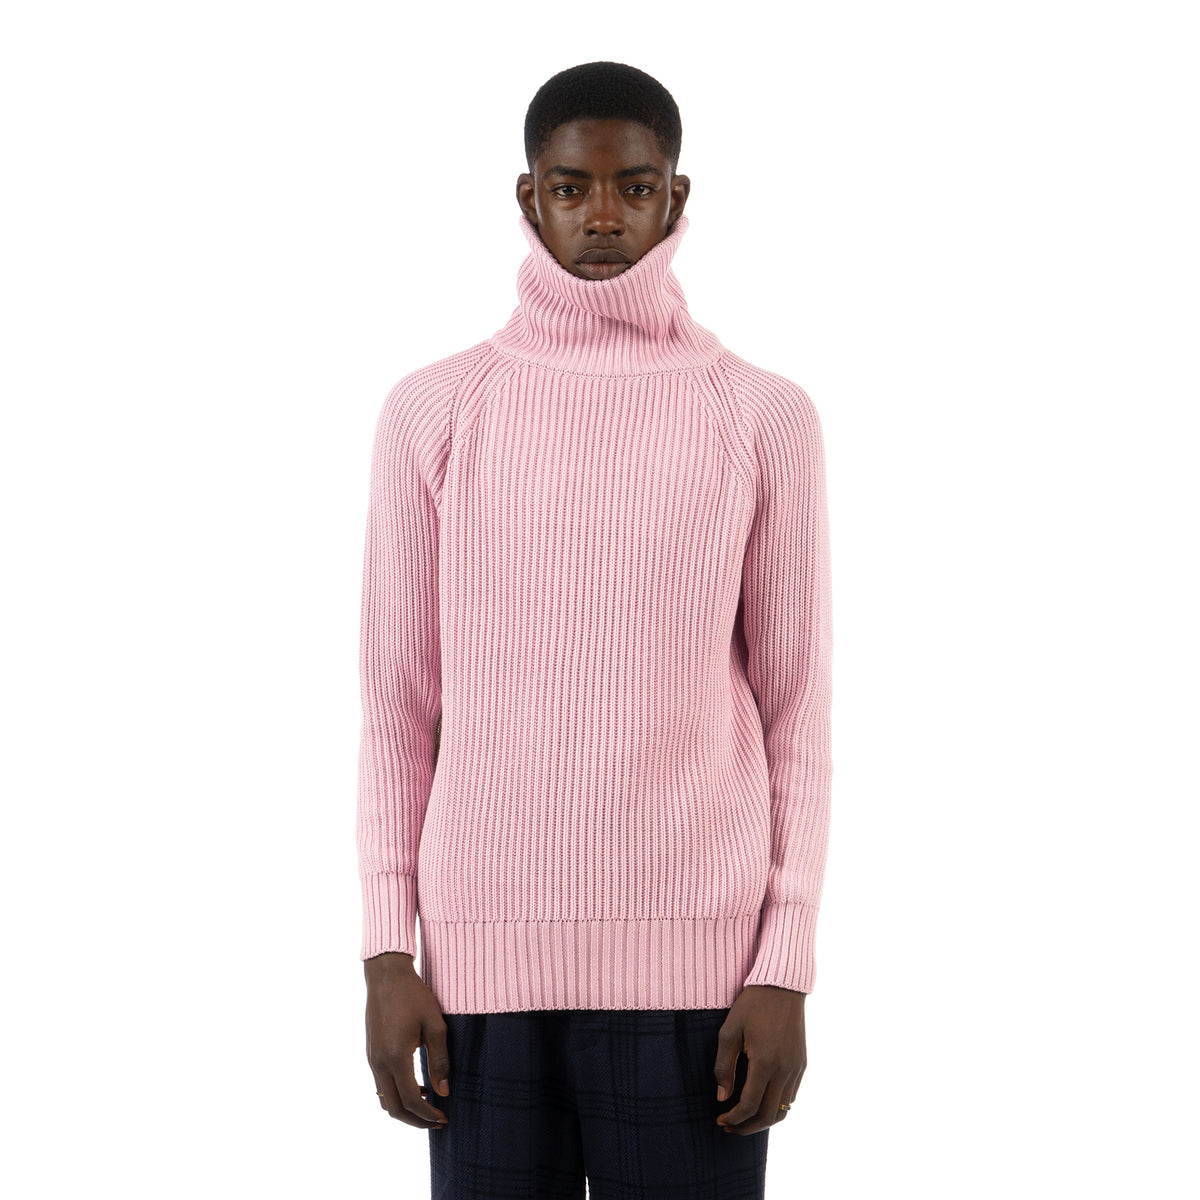 LC23 | Turtleneck Zip Sweater Pink - Concrete